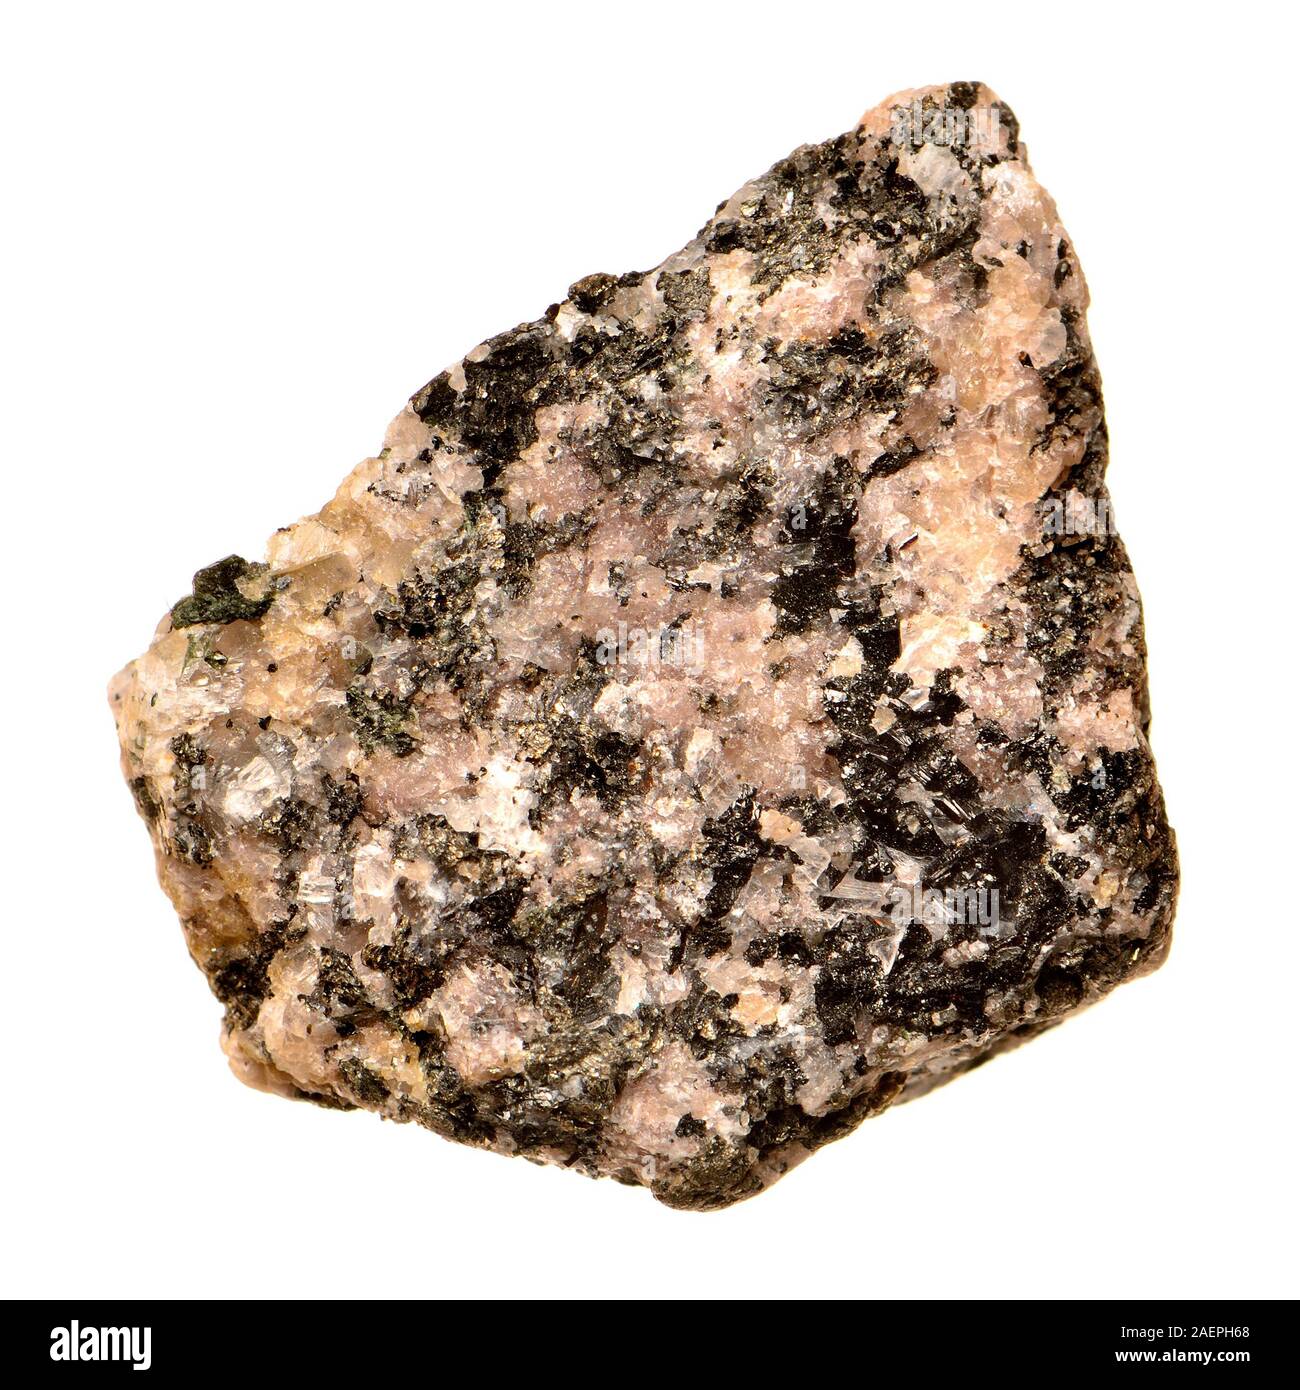 L'actinolite [hydroxyde silicate de calcium] Banque D'Images